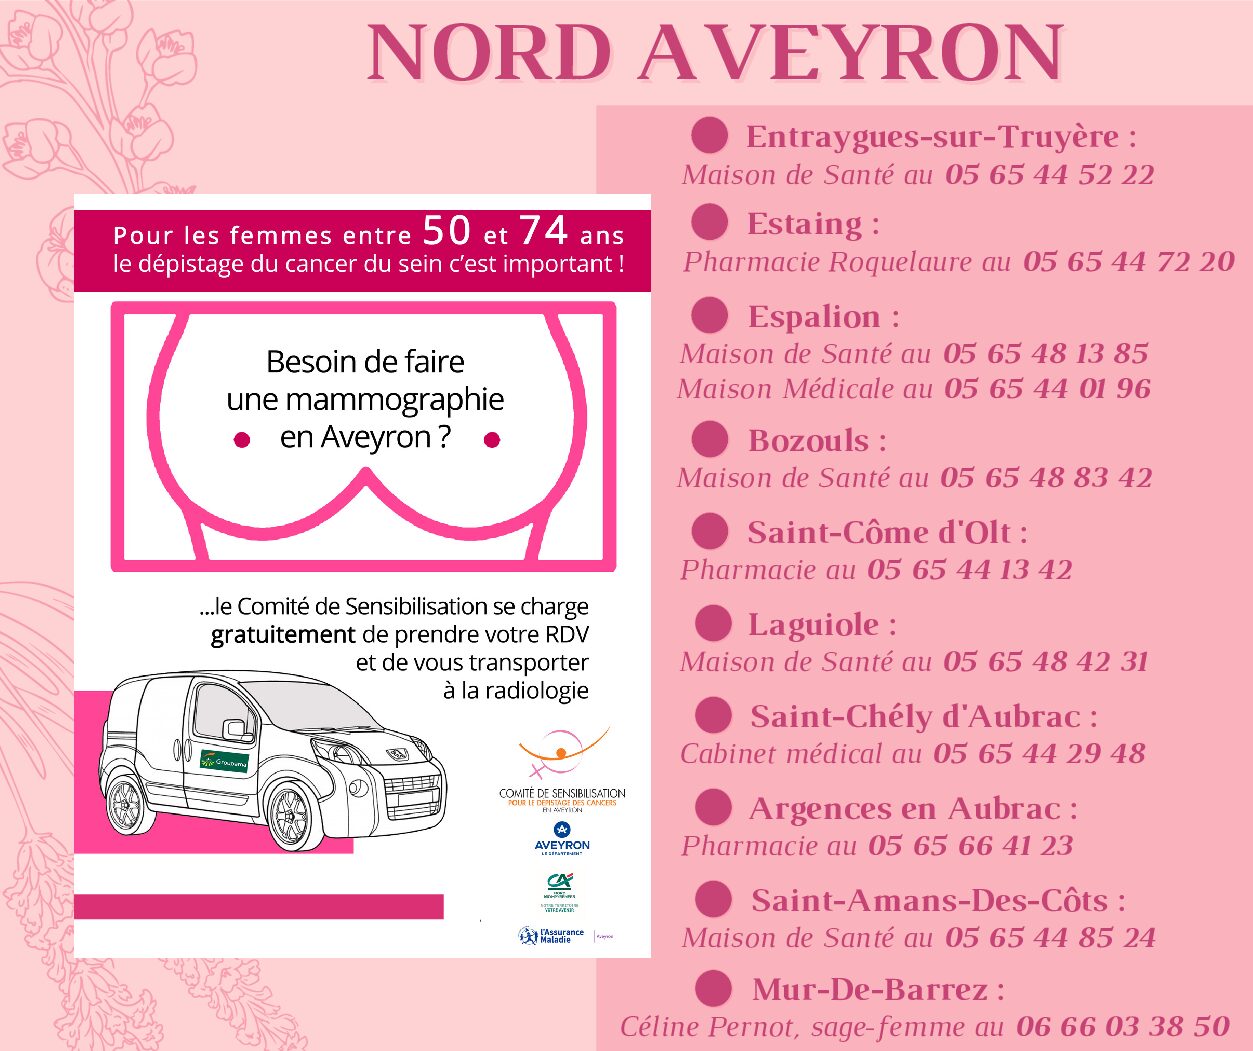 Prévention cancer du sein en Nord Aveyron